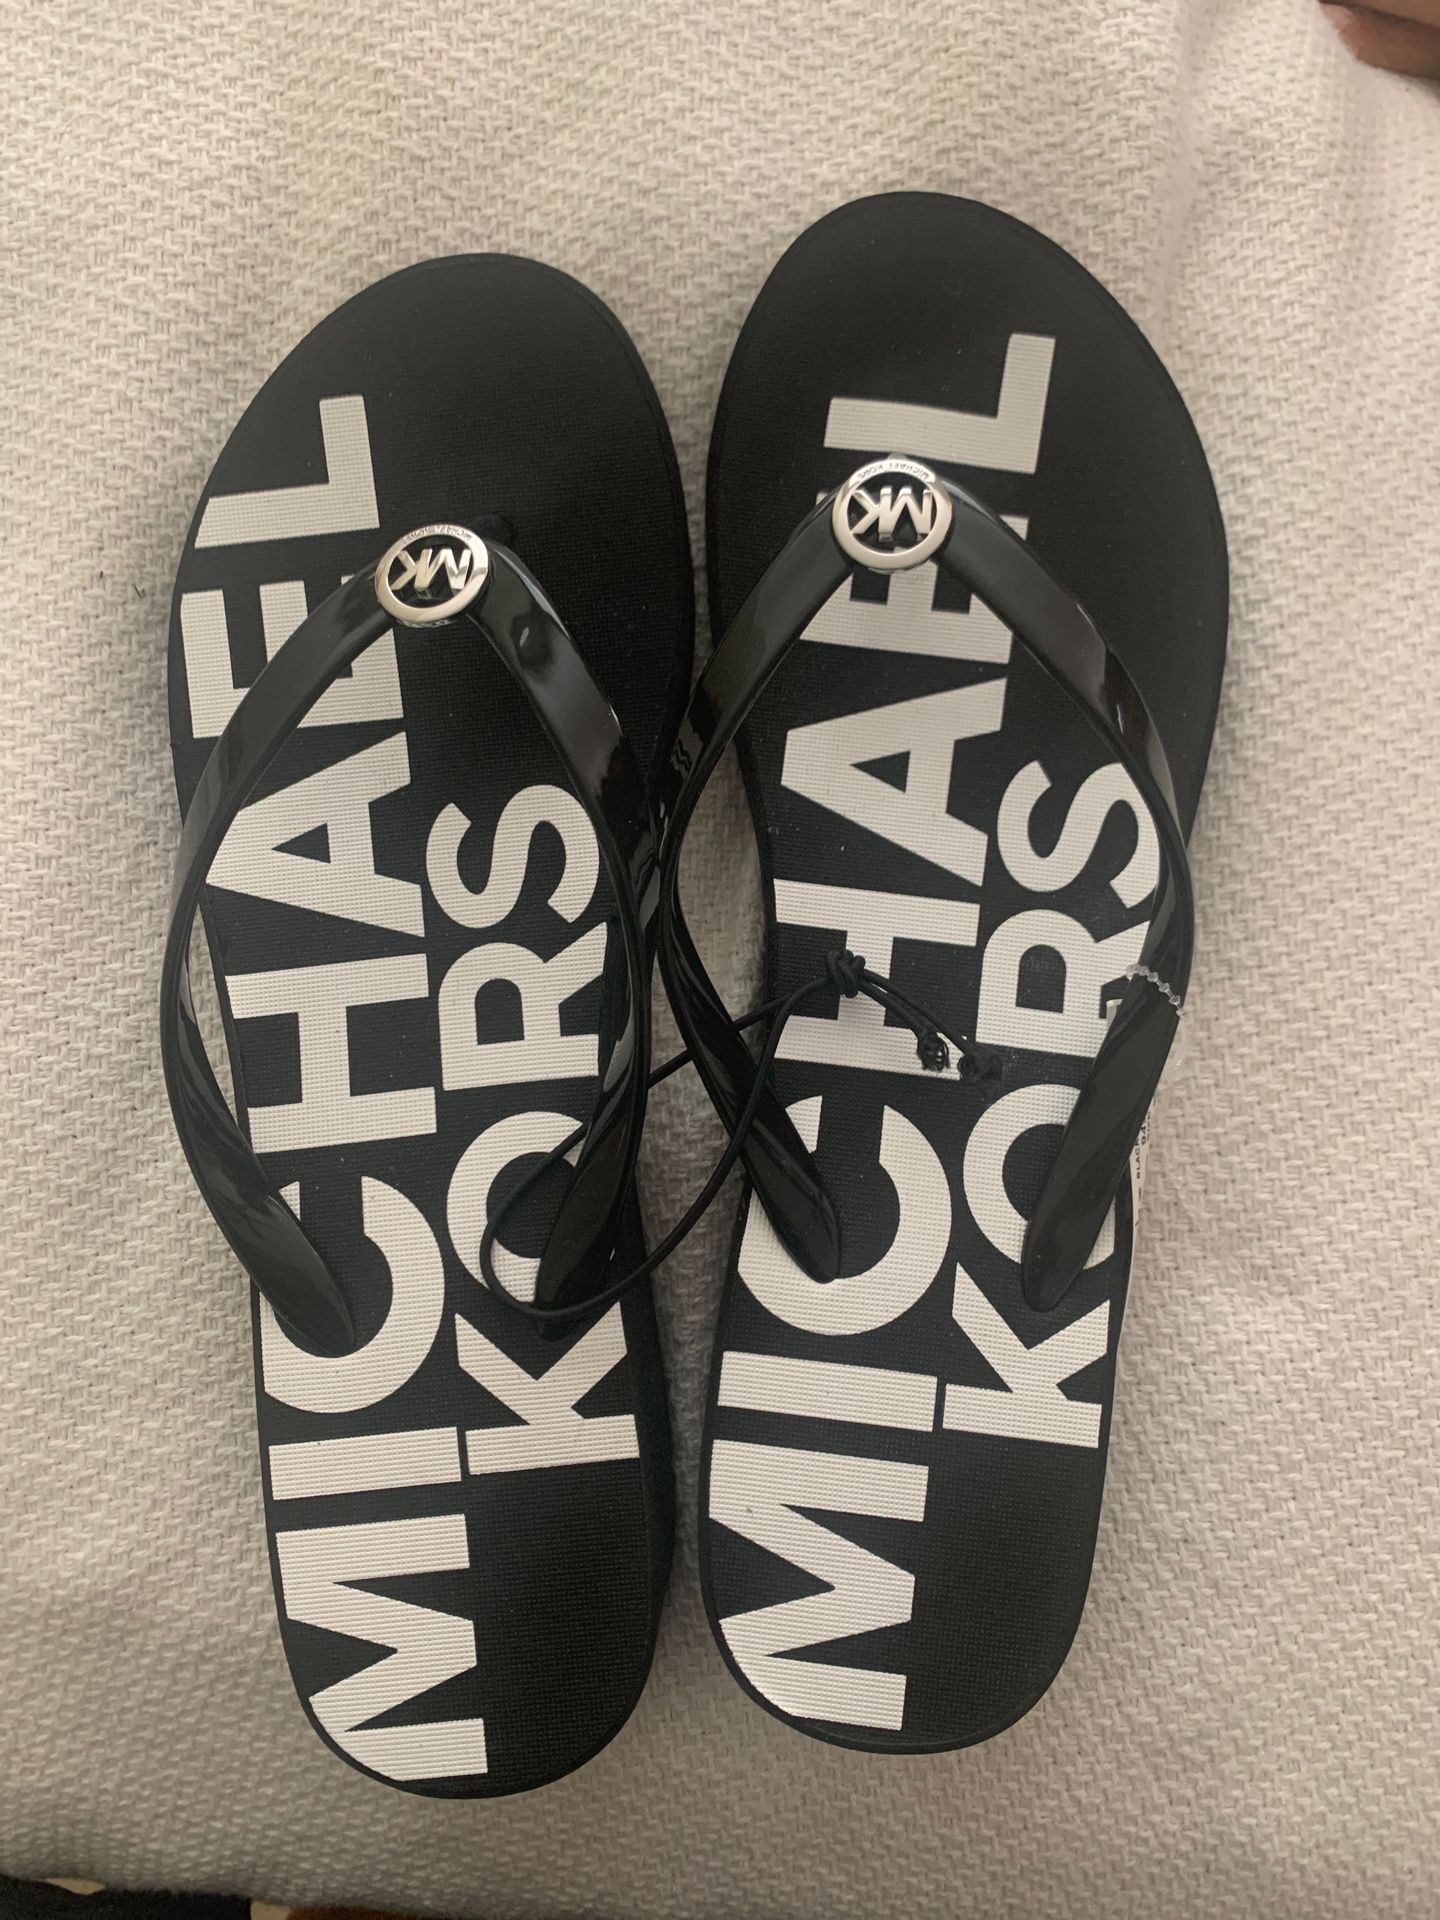 Michael Kors sandals new